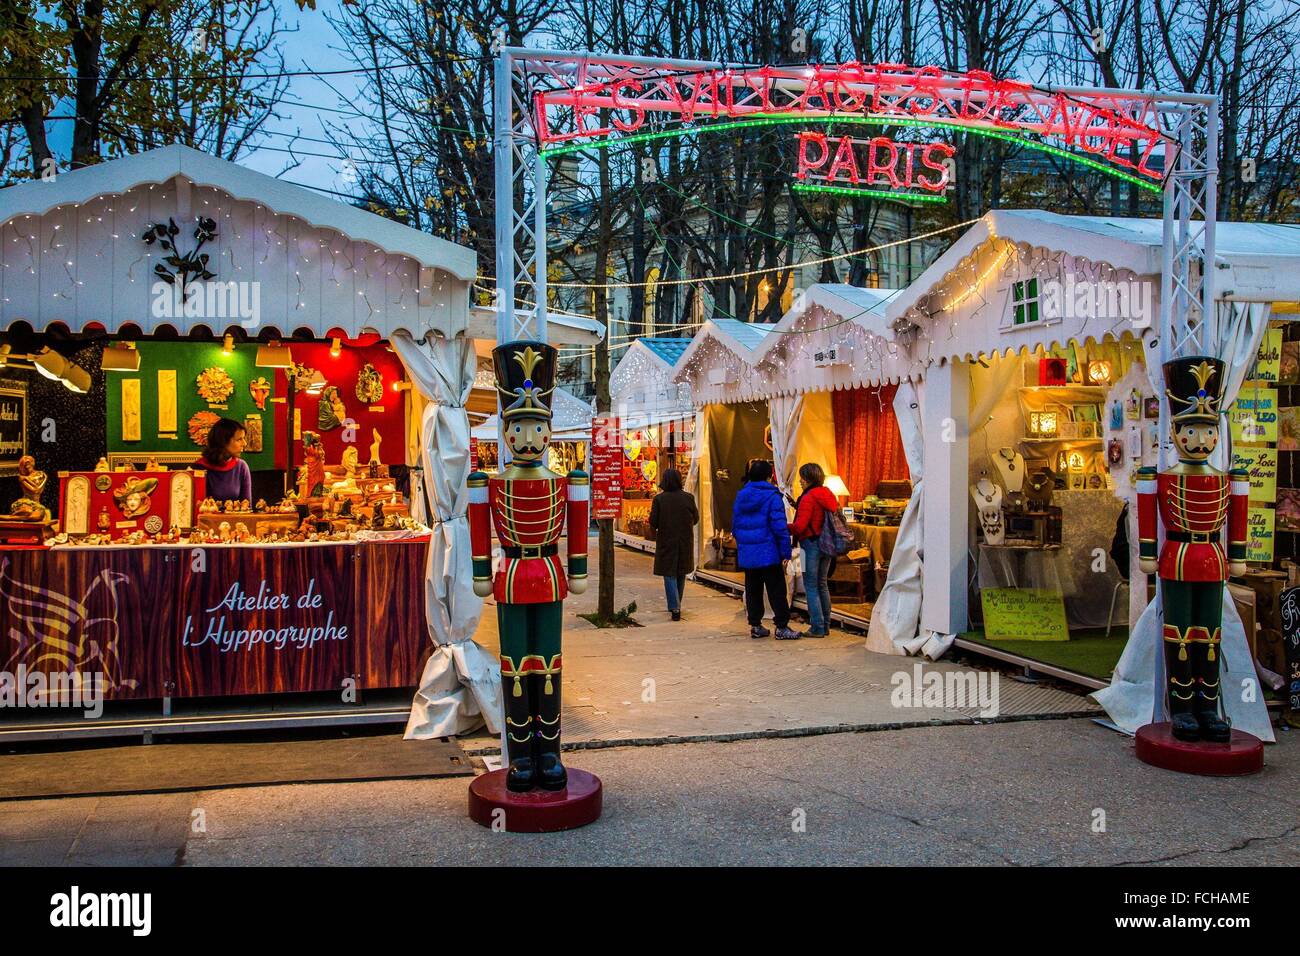 Feria de Navidad, Champs Elysee, París Foto de stock